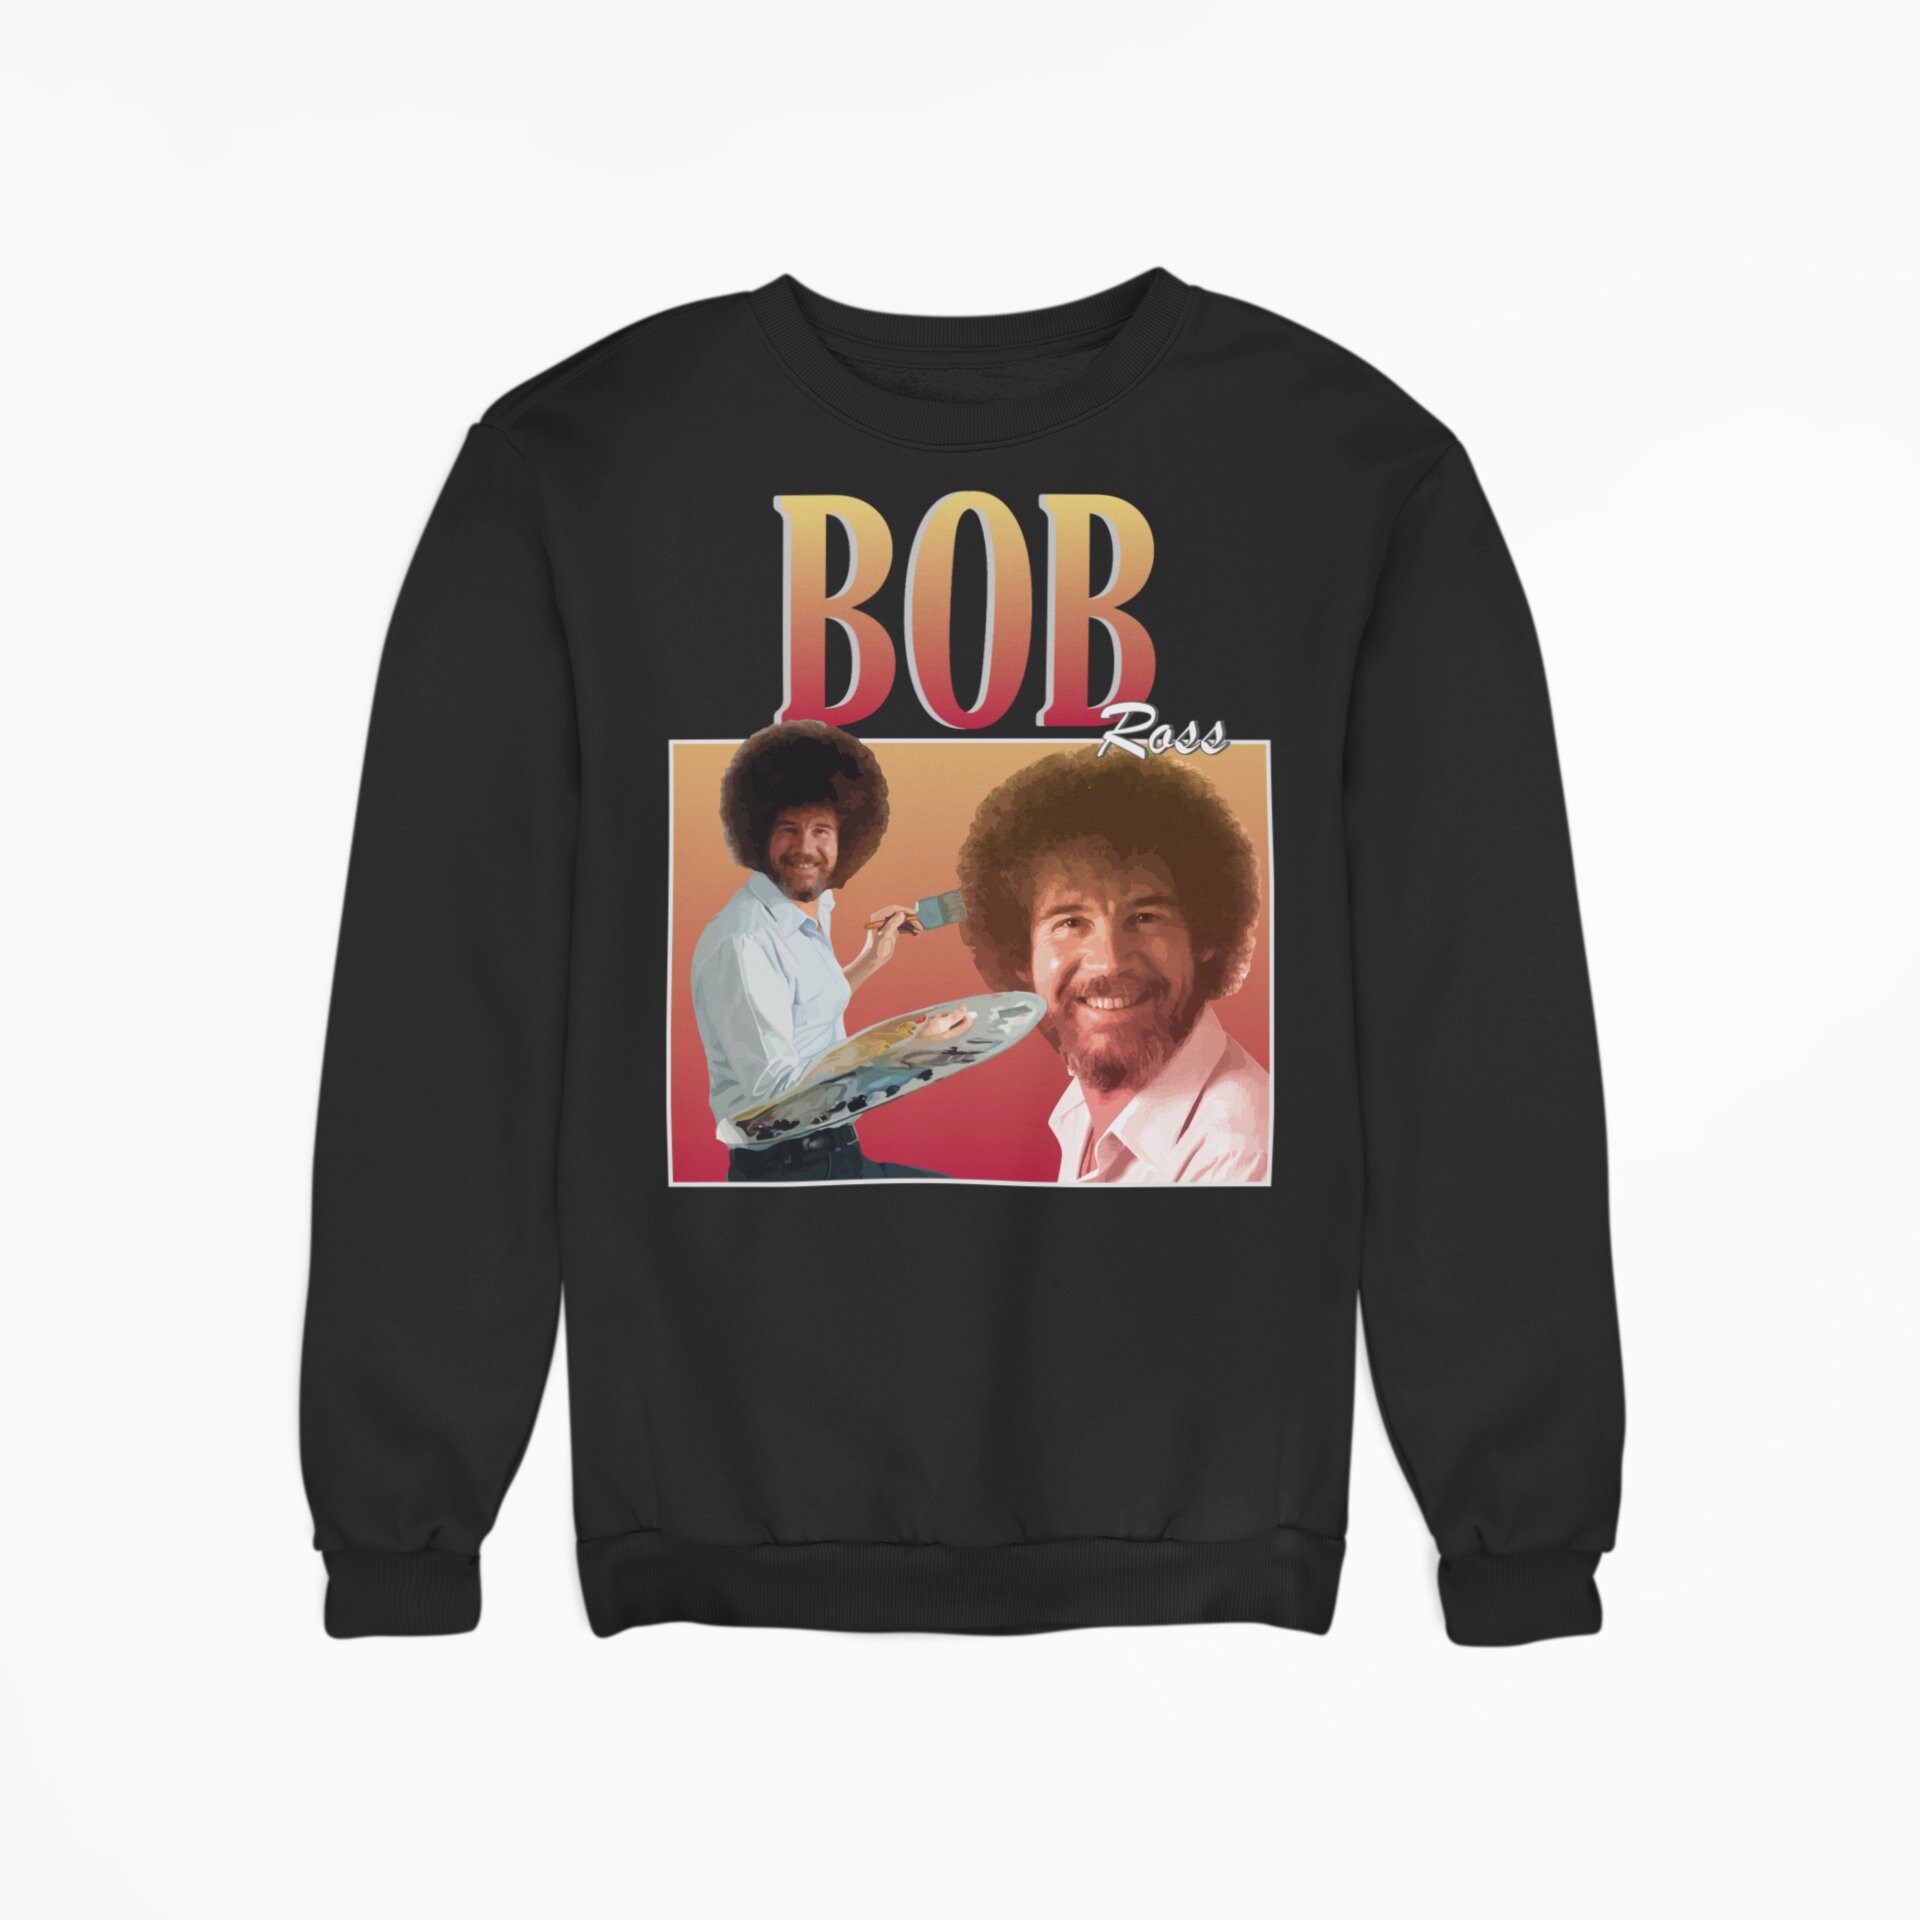 OFFICIAL Bob Ross T-Shirts, Gifts & Merchandise